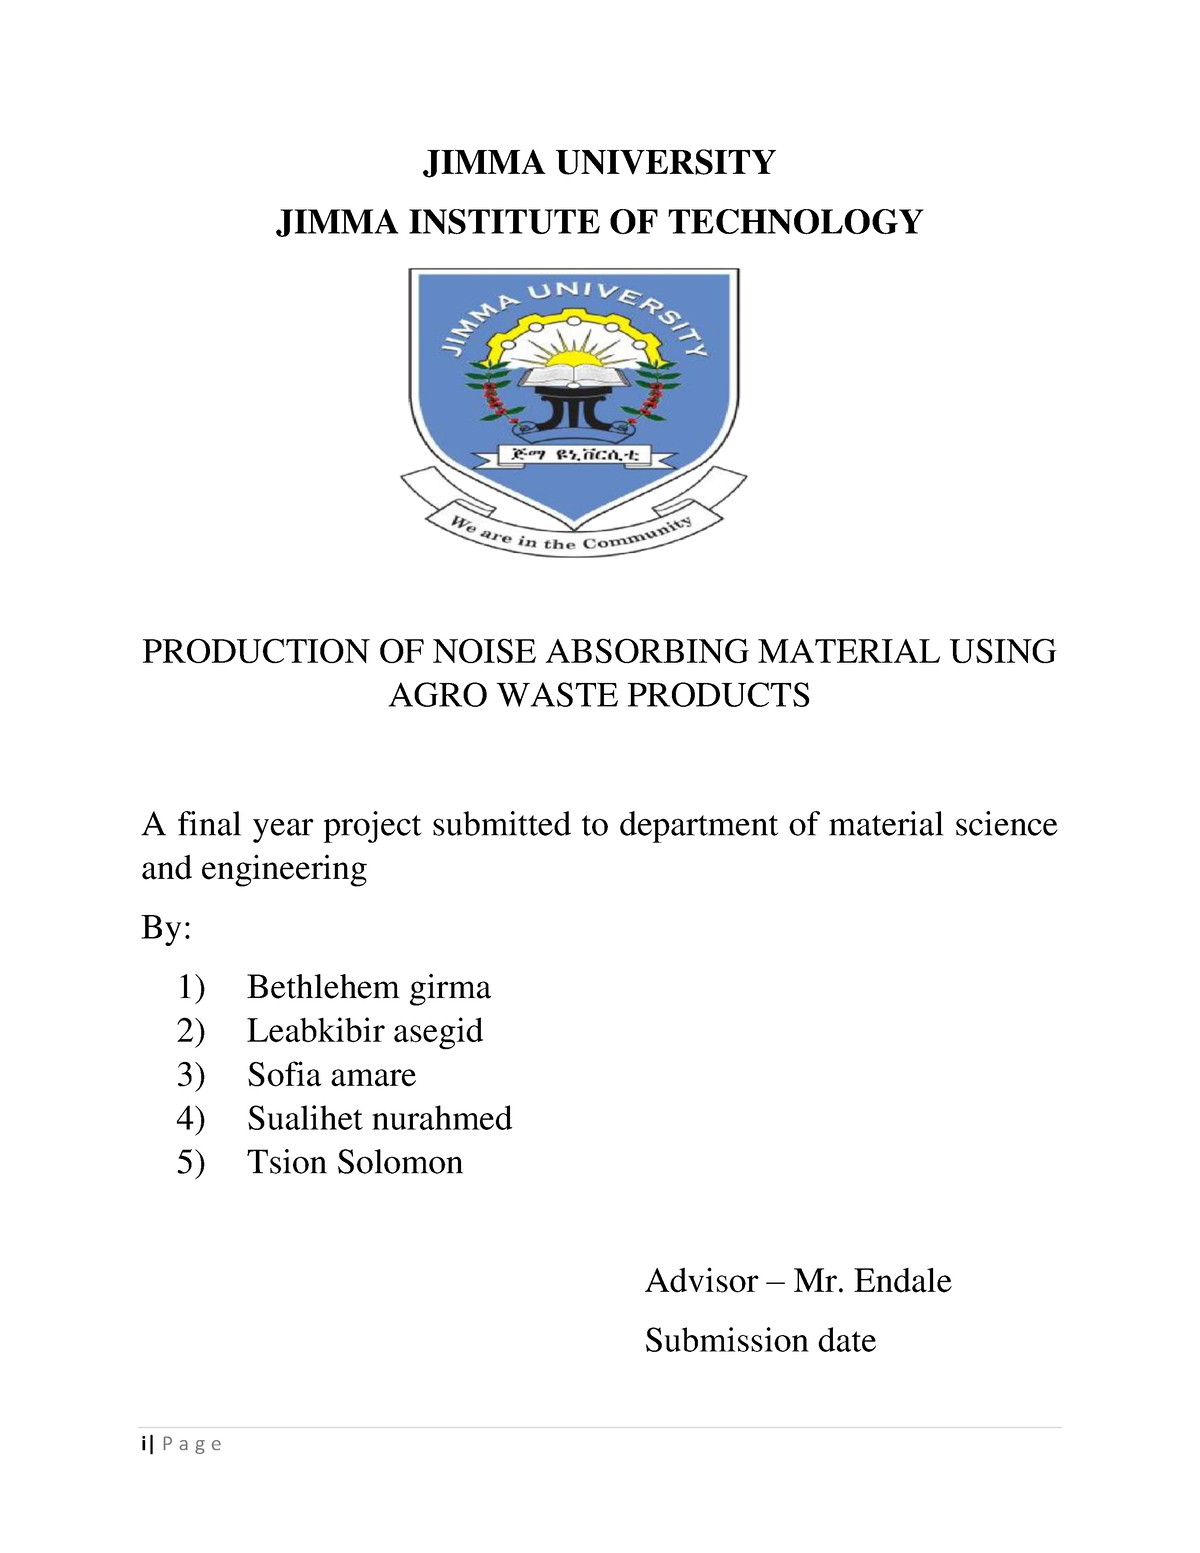 jimma university thesis format pdf